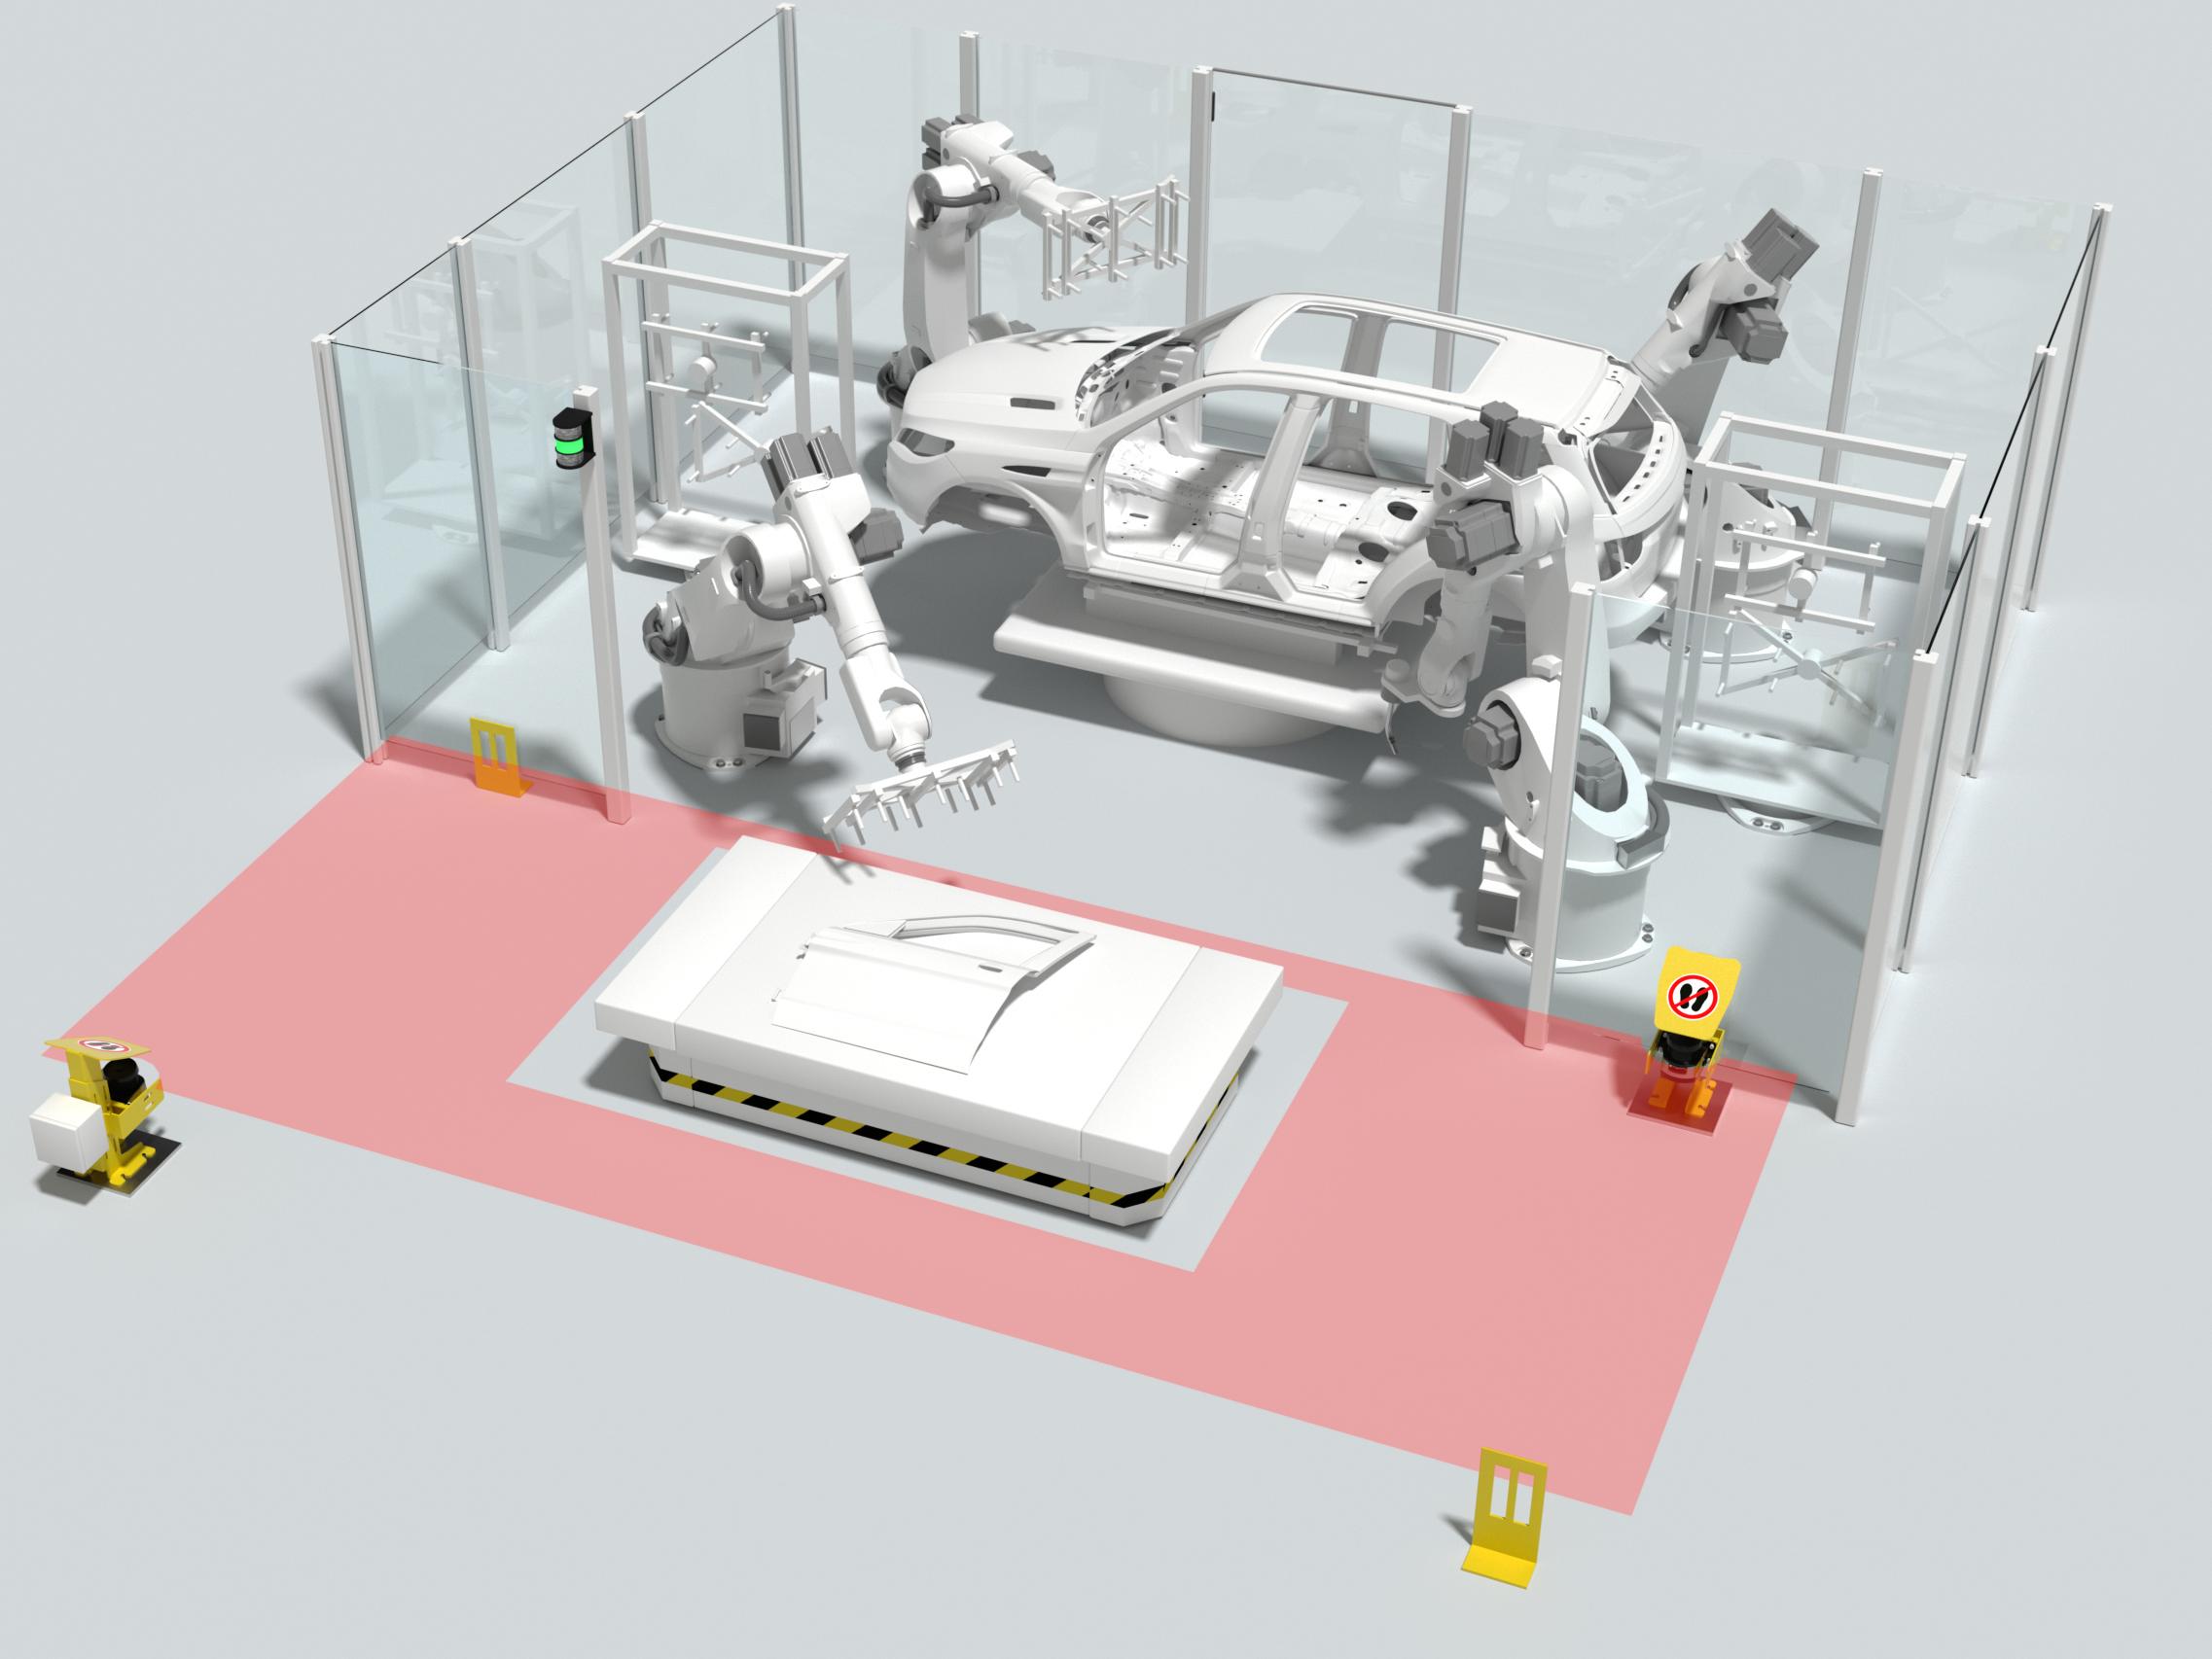 Dynamic safeguarding of AGV/robot transfer stations